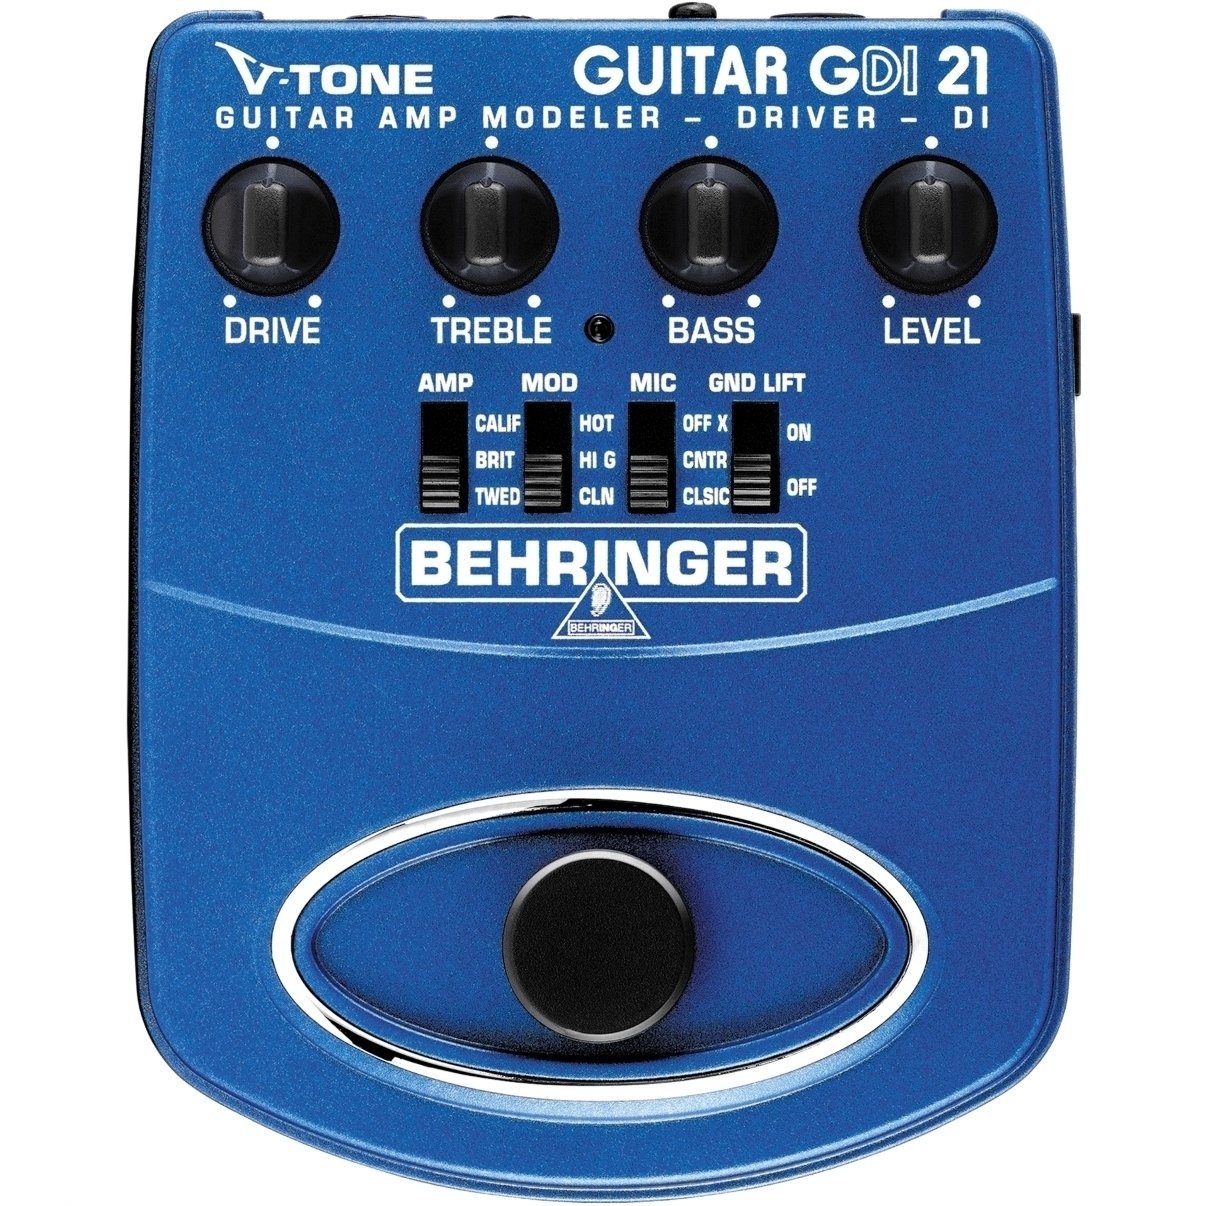 Efeito para guitarra Behringer GDI21